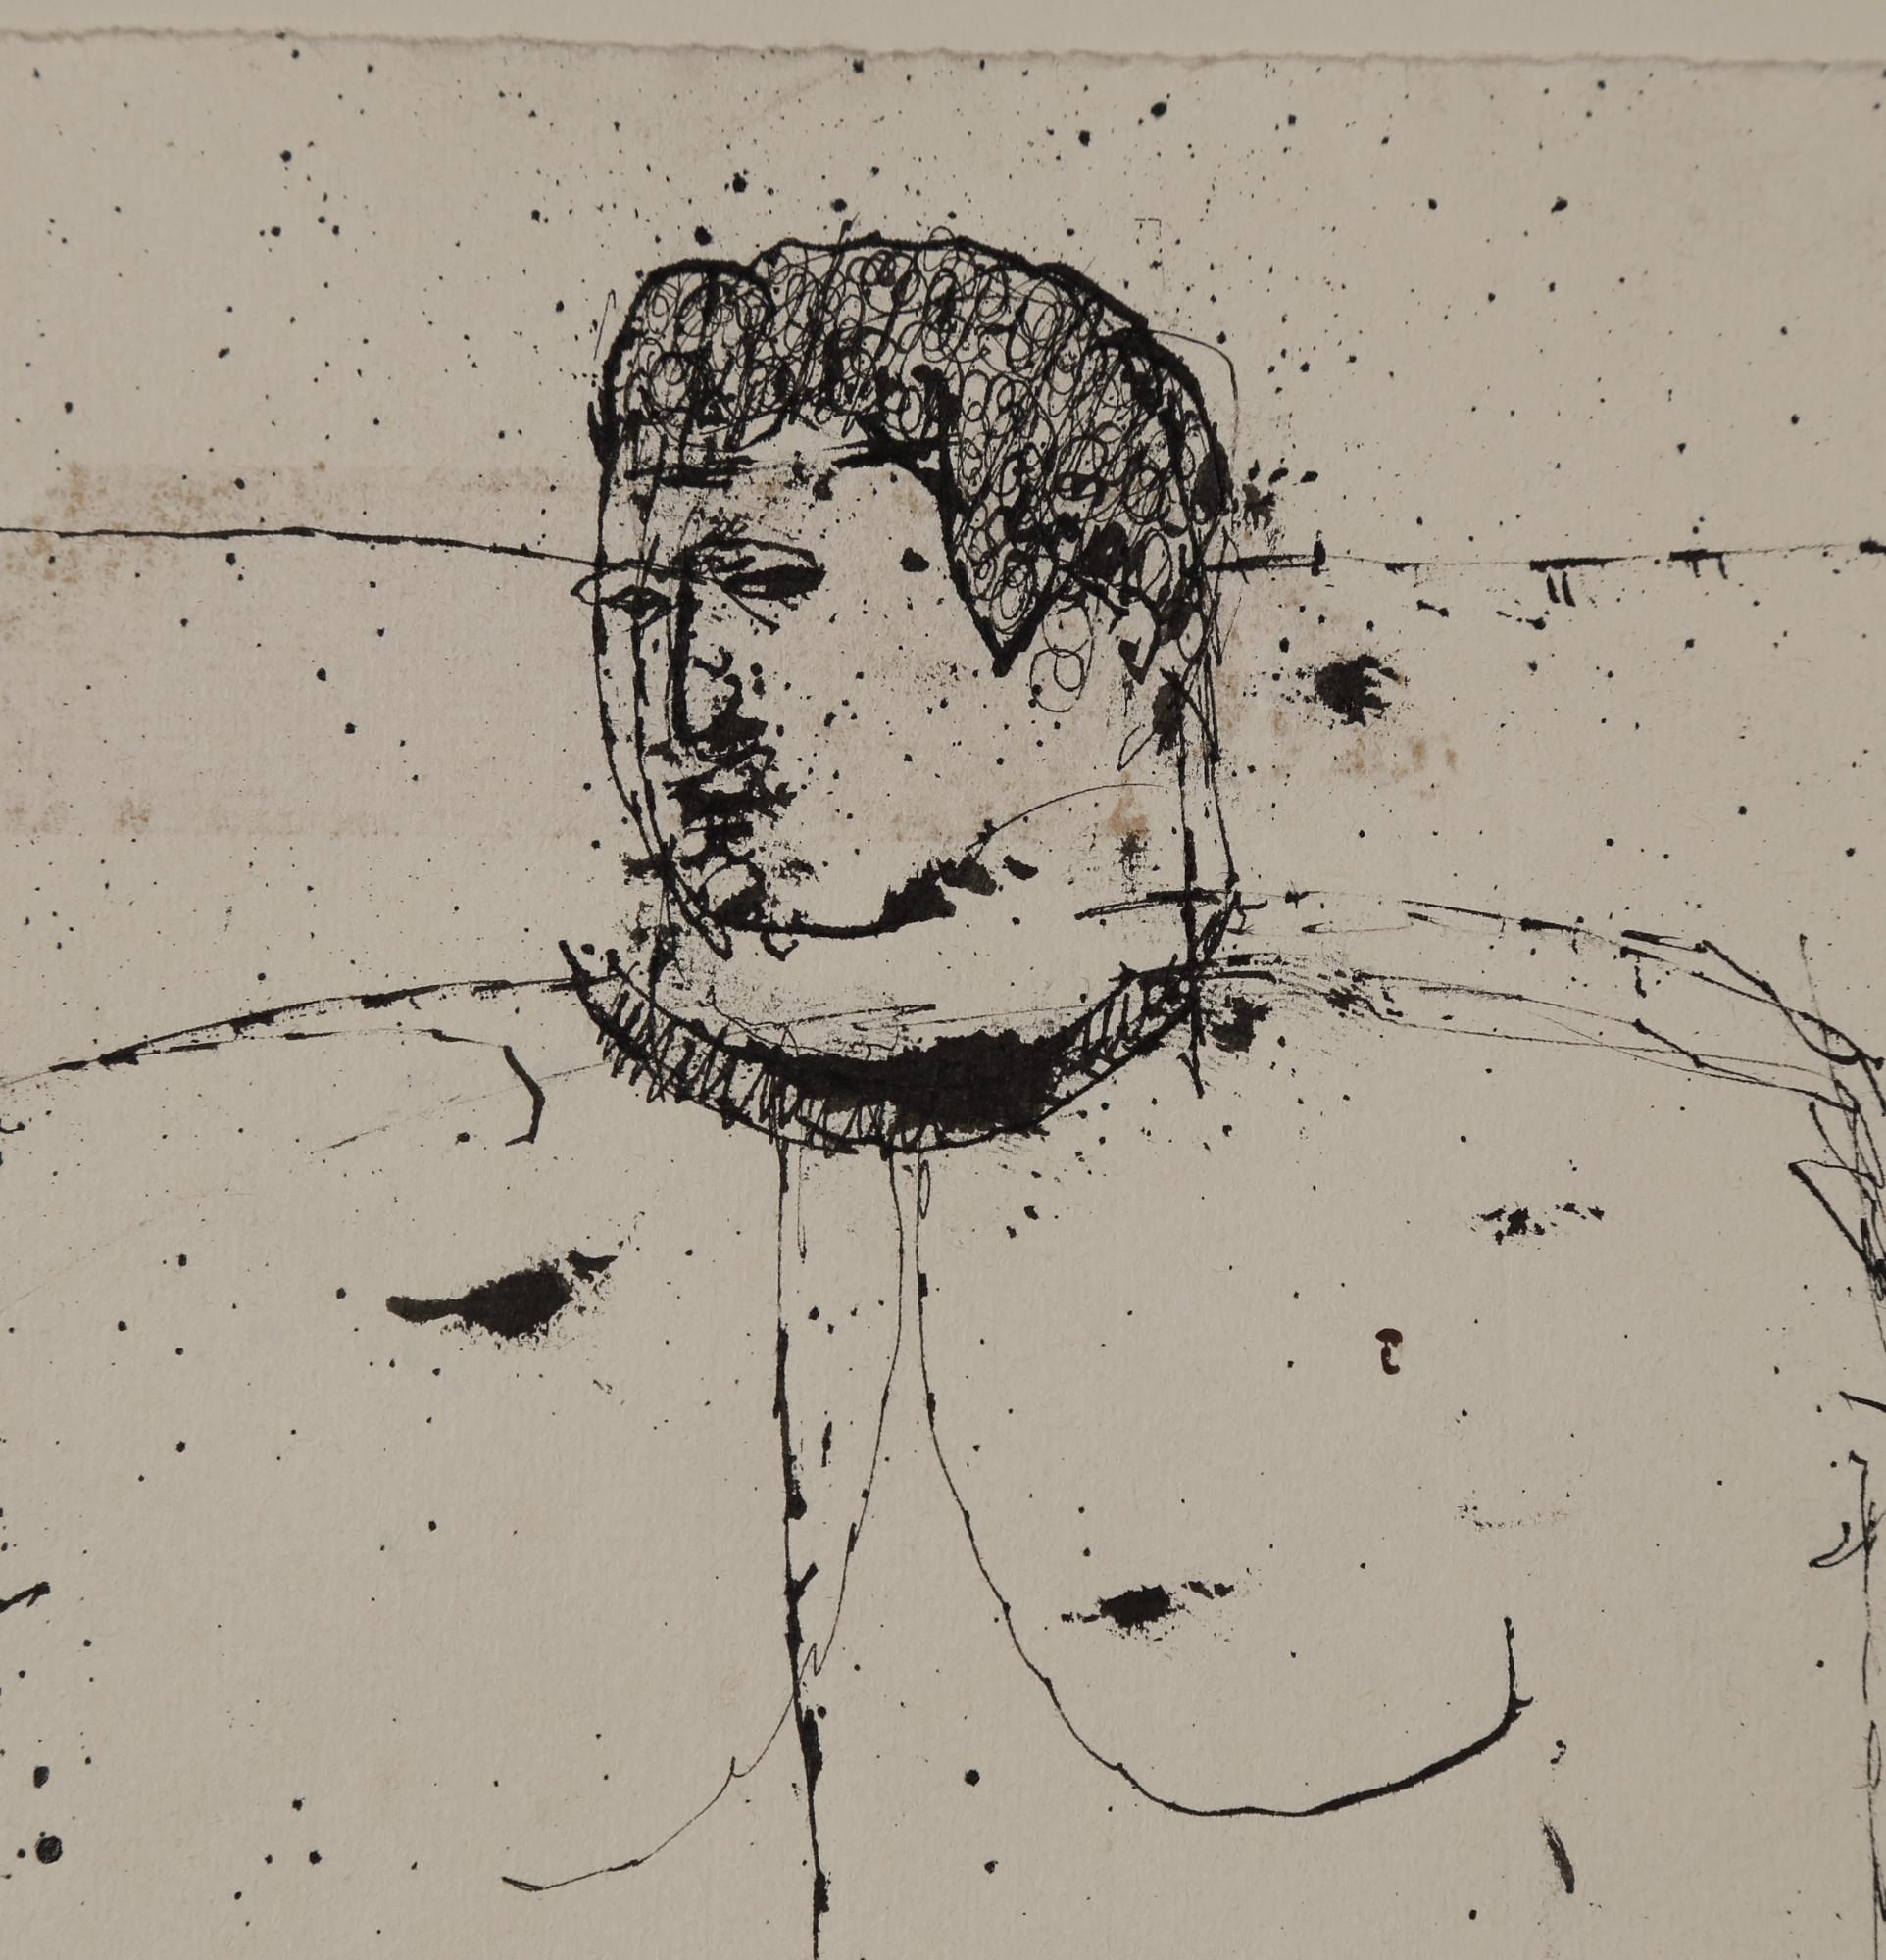 Seated Figure, 20th century figural abstract expressionist ink drawing - Abstract Expressionist Art by Joseph Glasco